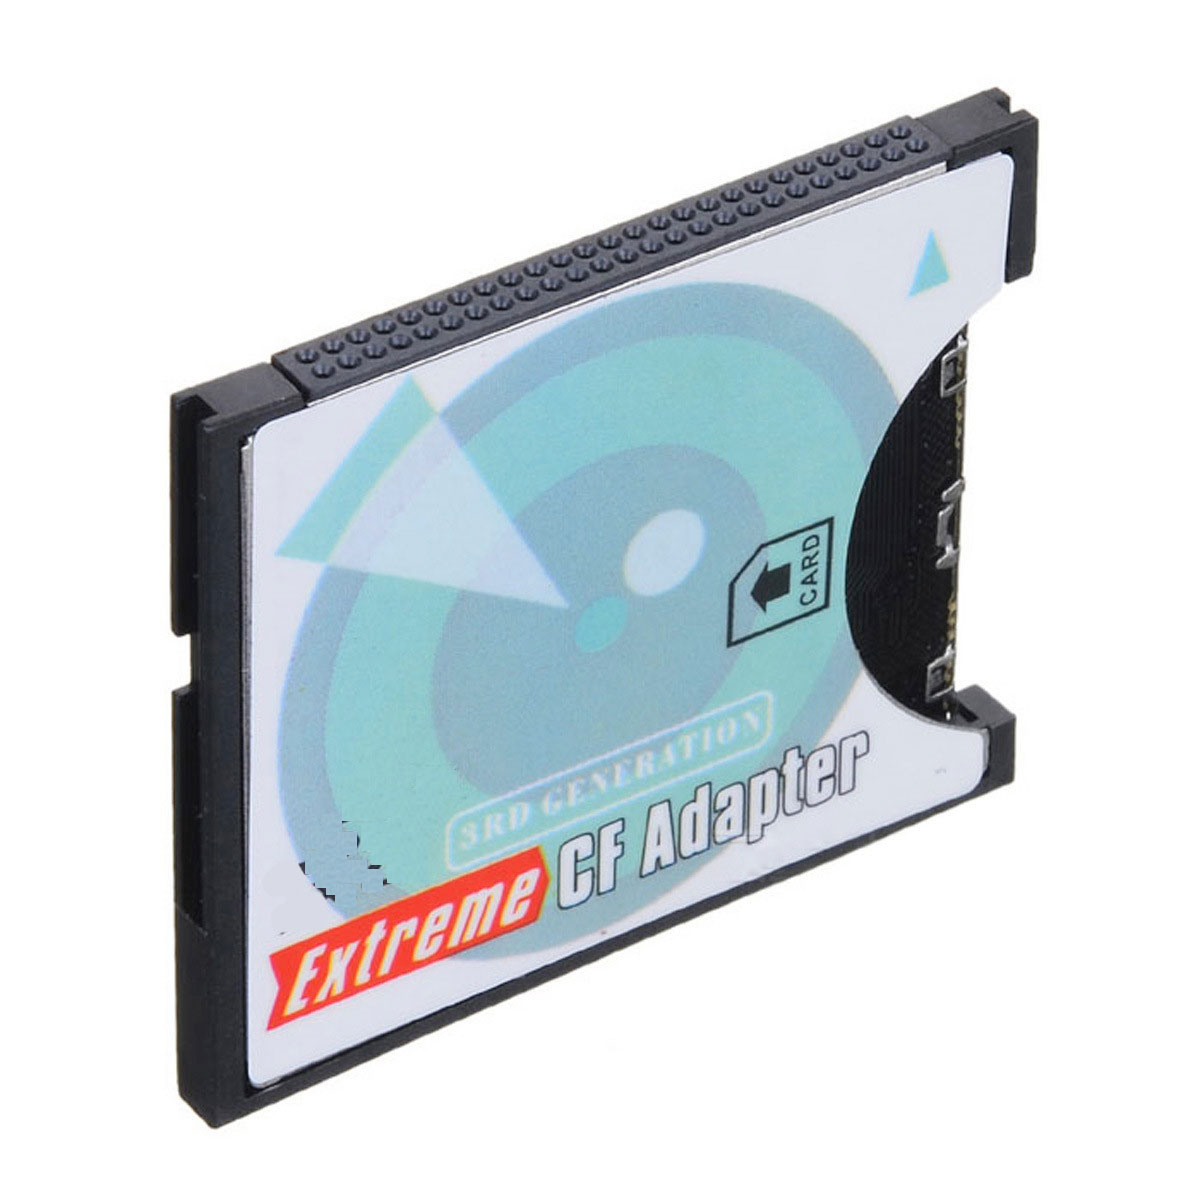 EP-025-Memory-Card-Adapter-Converter-for-SD-Card-MMC-to-CF-I-CF-II-Card-1396343